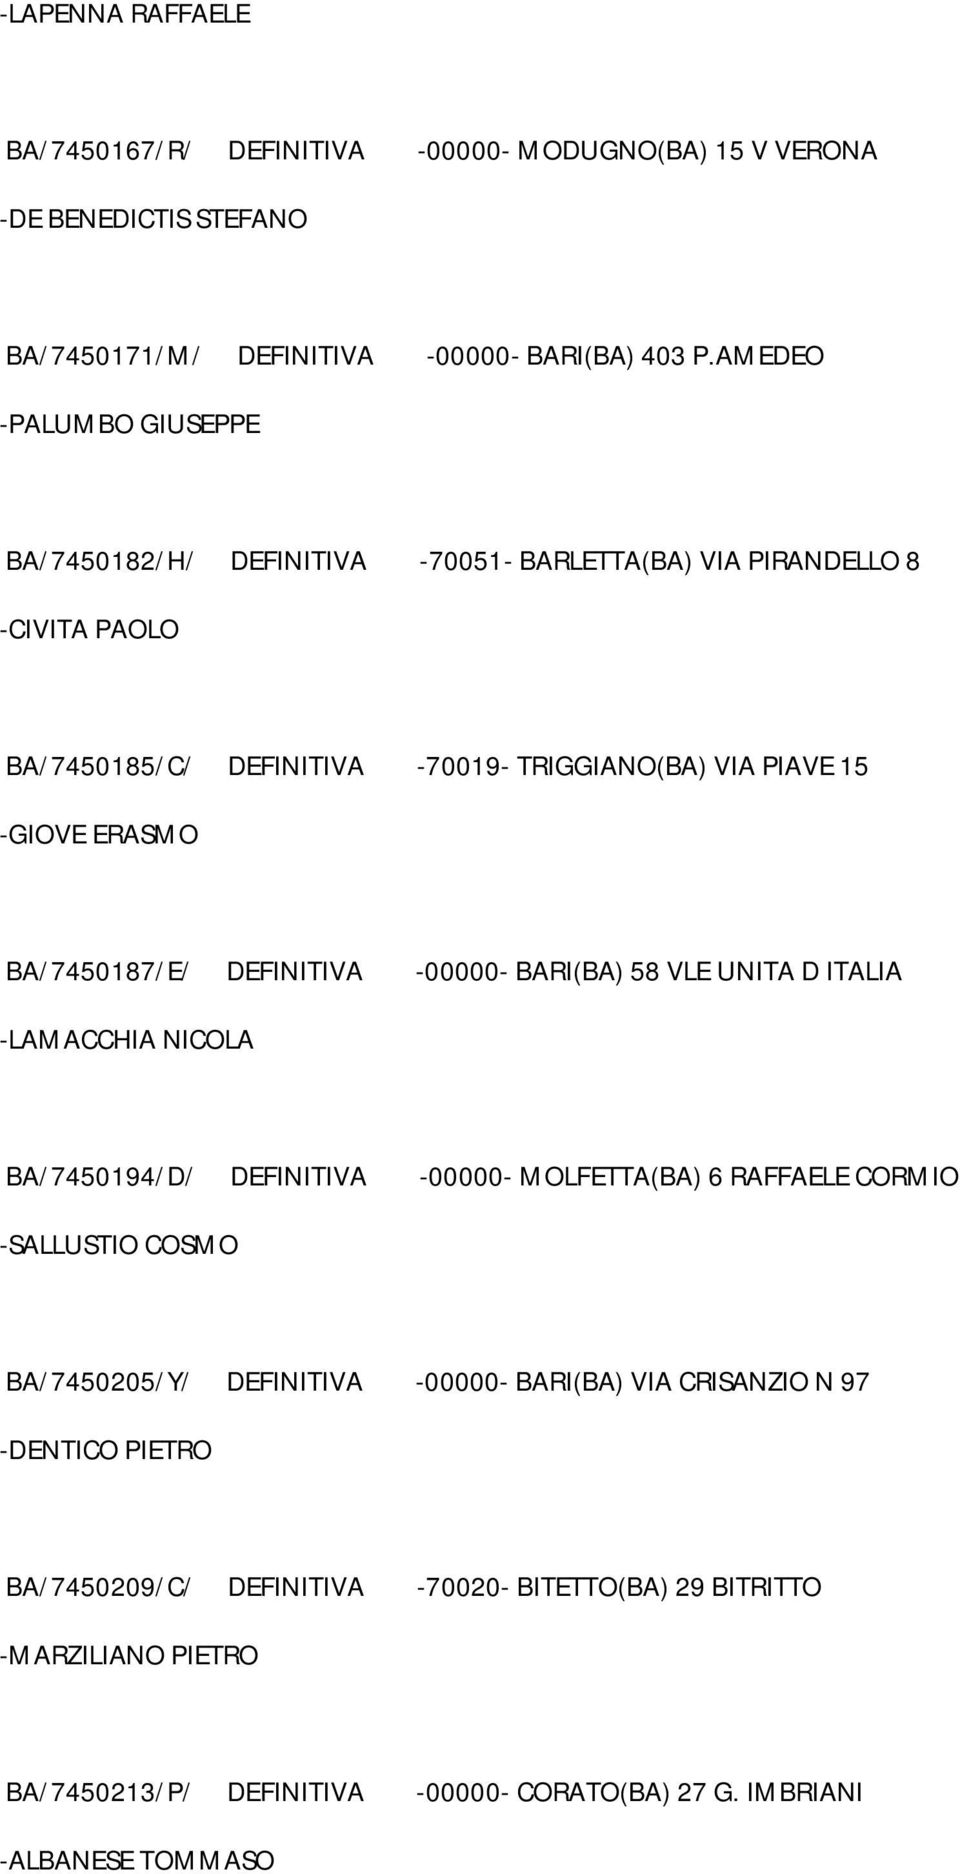 BA/7450187/E/ DEFINITIVA -00000- BARI(BA) 58 VLE UNITA D ITALIA -LAMACCHIA NICOLA BA/7450194/D/ DEFINITIVA -00000- MOLFETTA(BA) 6 RAFFAELE CORMIO -SALLUSTIO COSMO BA/7450205/Y/